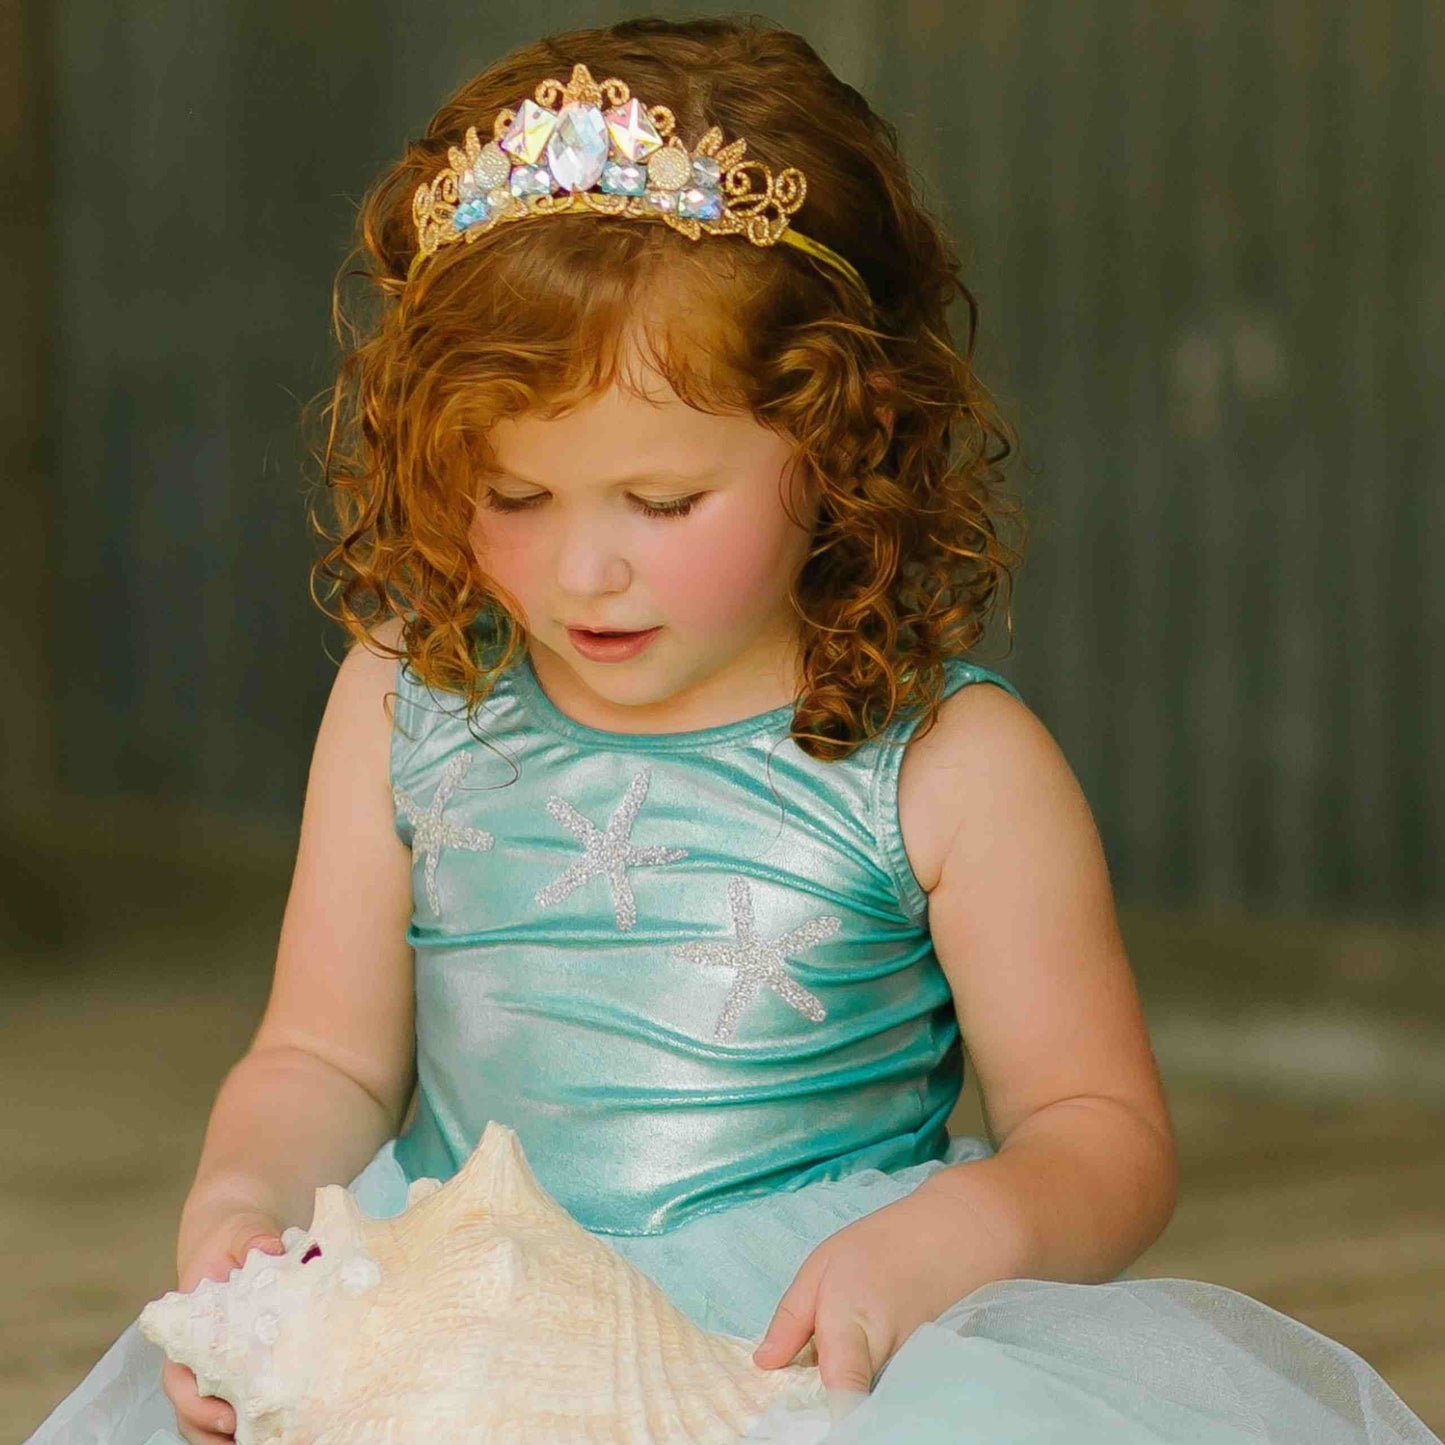 a little girl in a blue dress holding a seashell